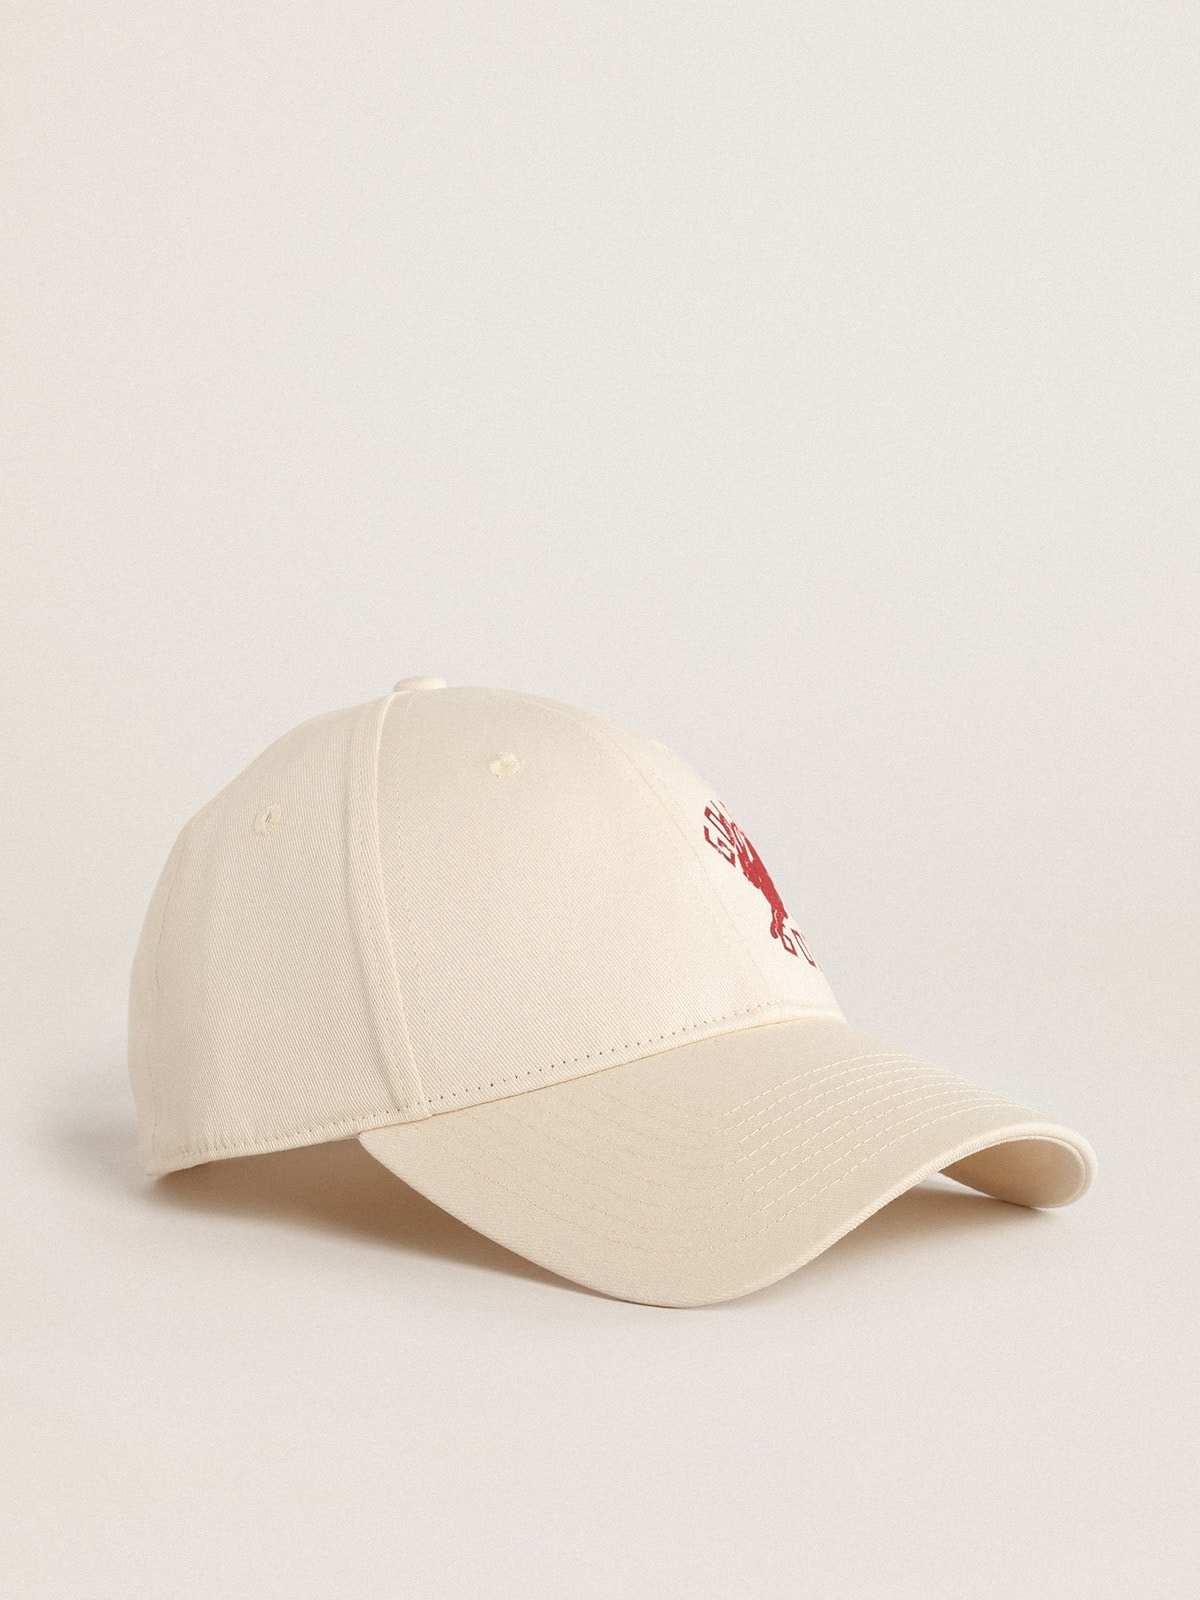 Heritage white baseball cap with CNY logo - 2